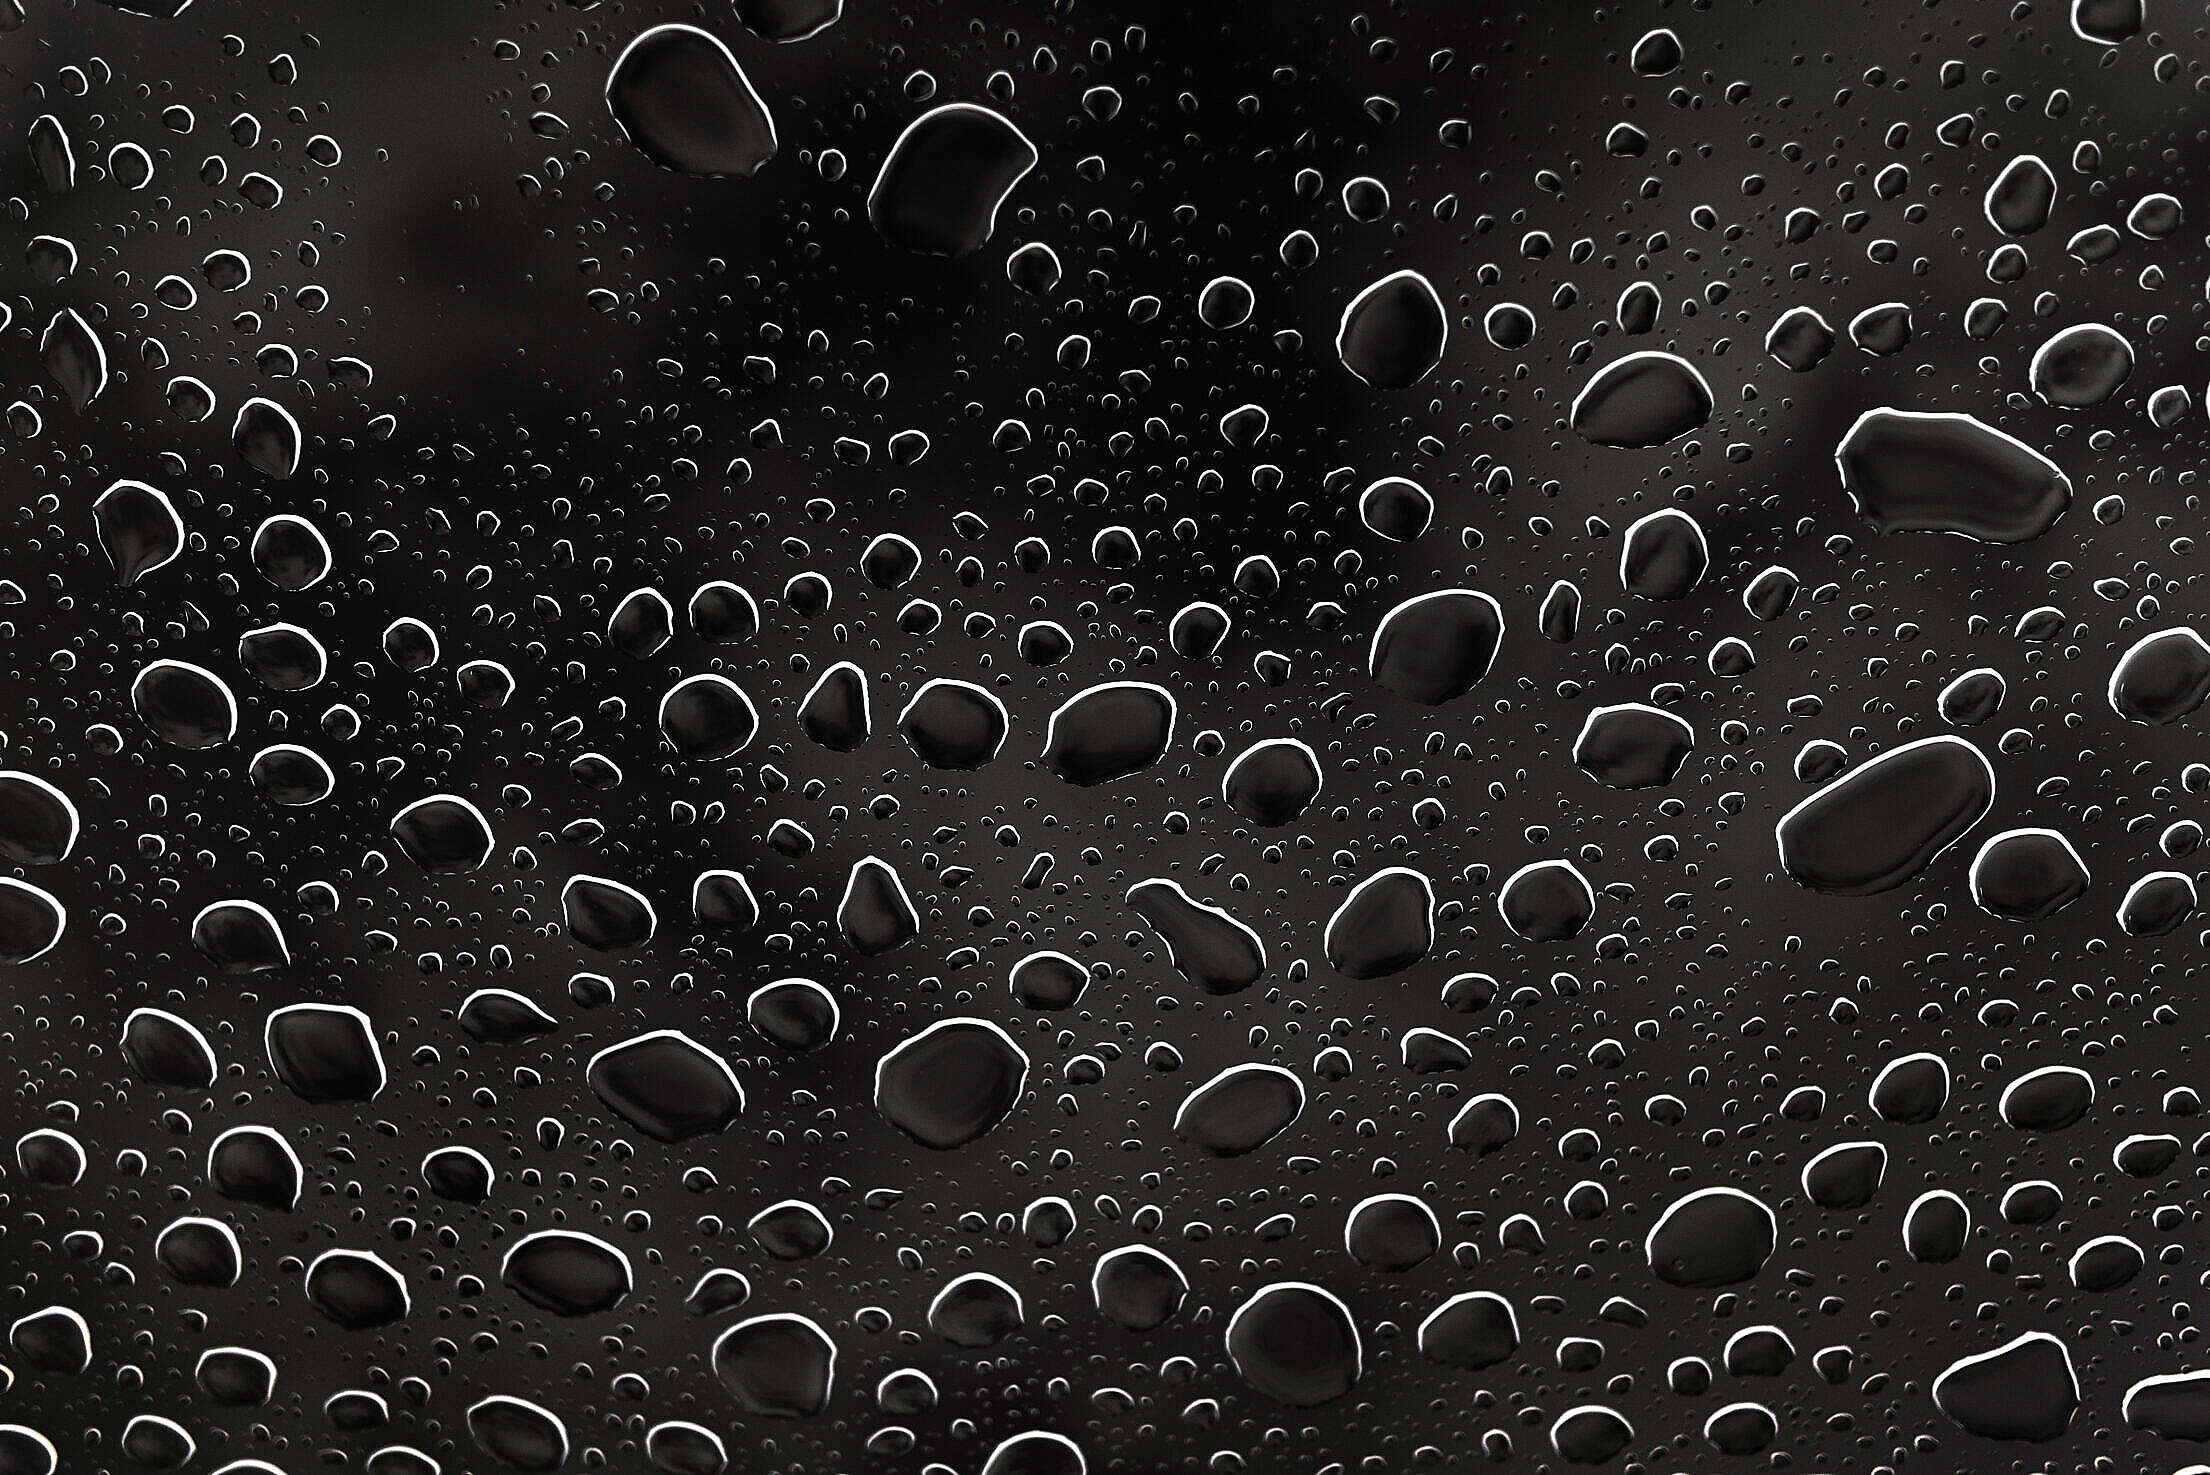 Black Drops on Black Glass Free Stock Photo